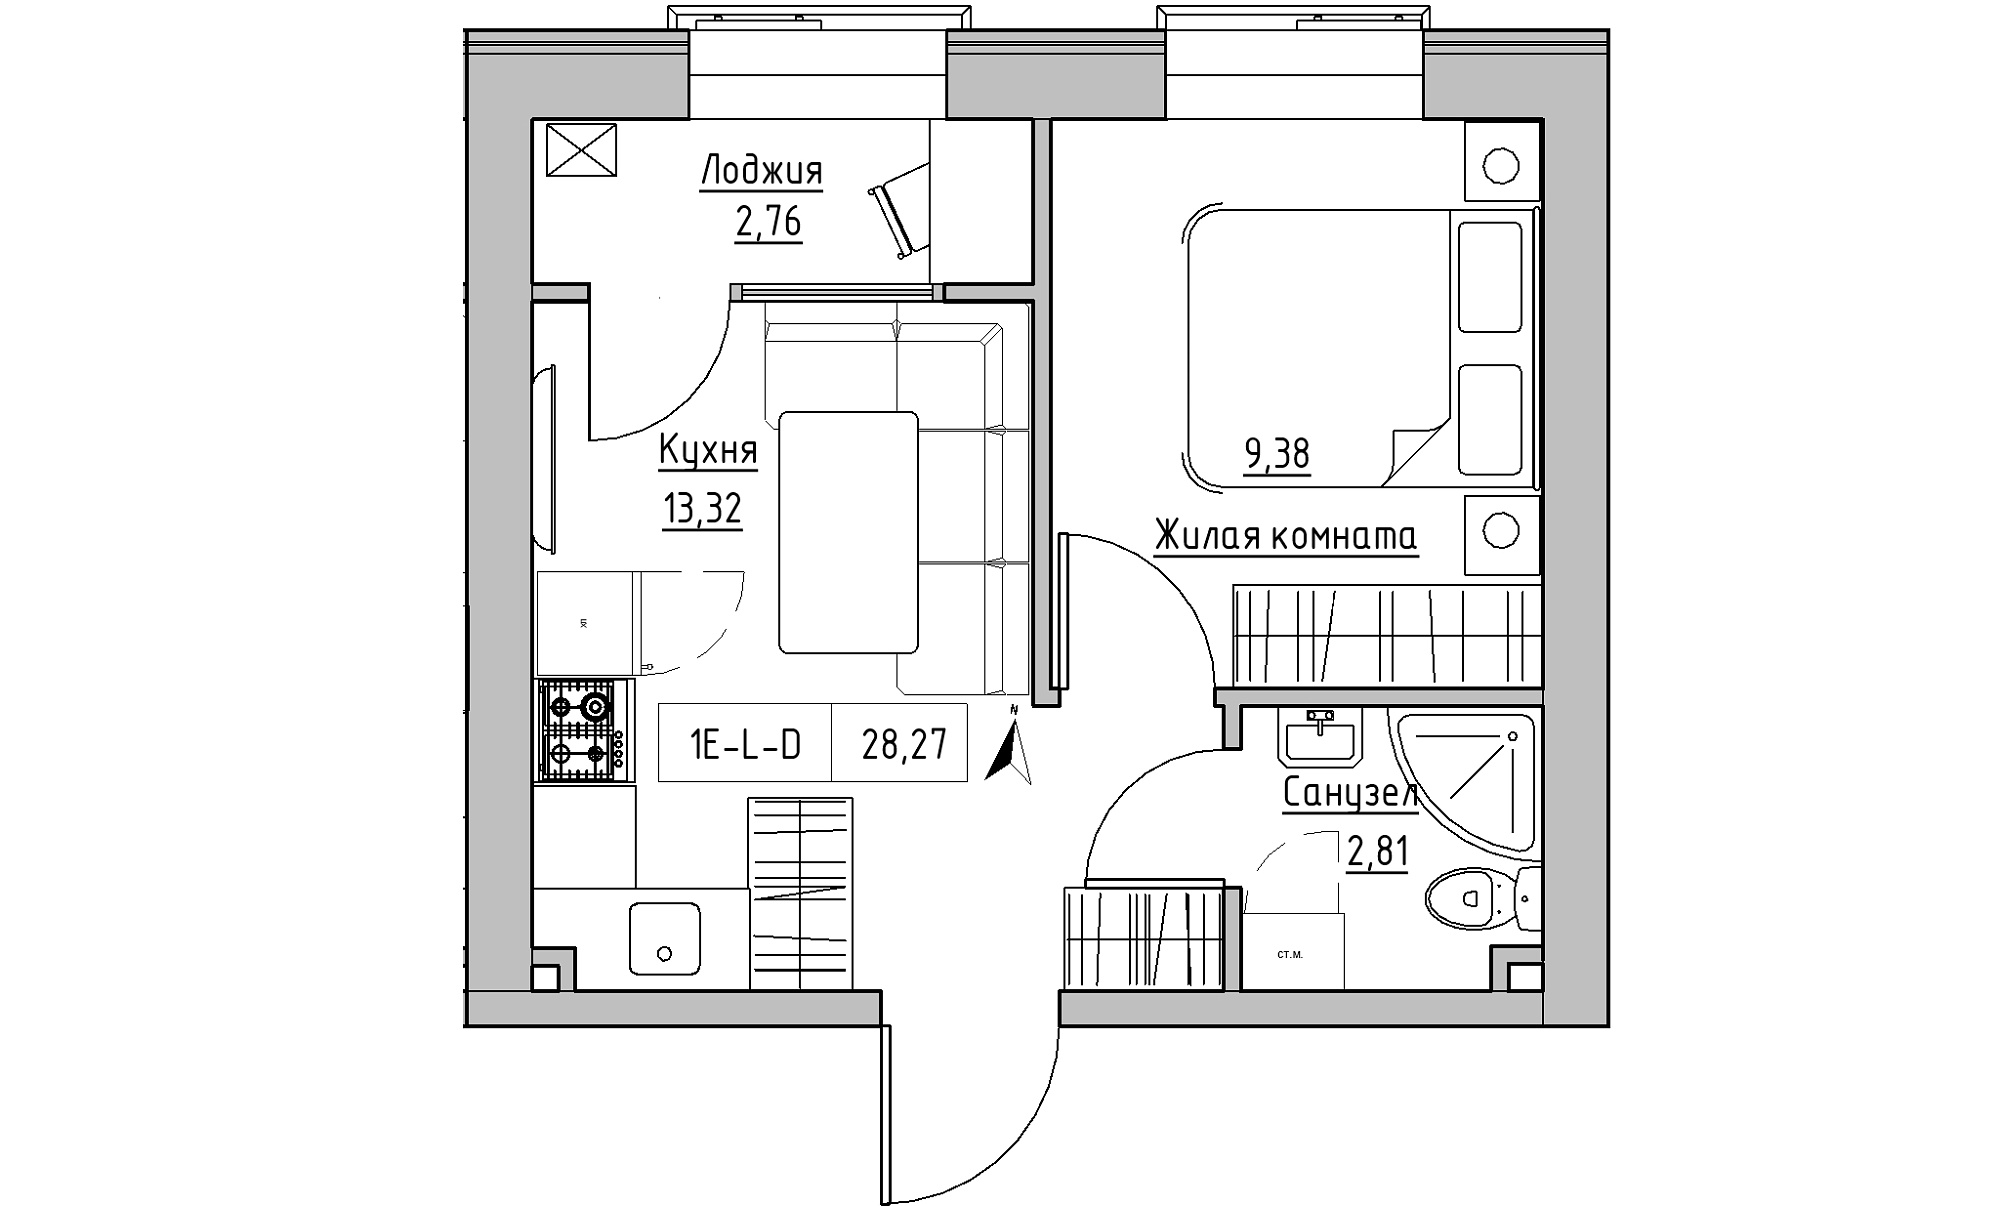 Planning 1-rm flats area 28.27m2, KS-023-01/0017.